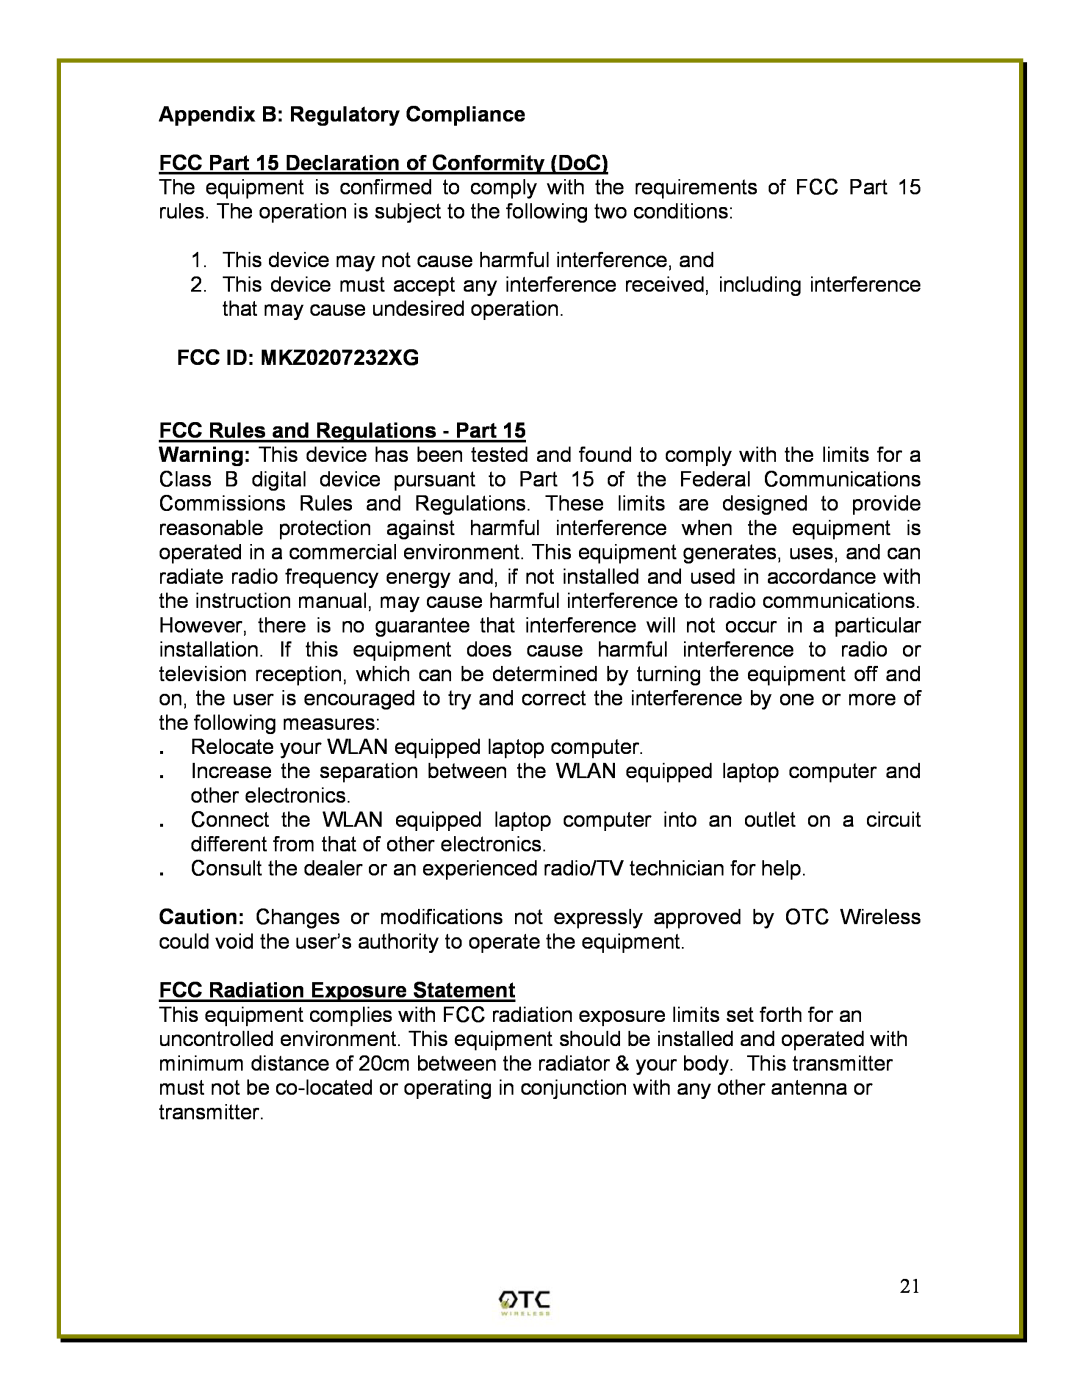 OTC Wireless WiSER2400 manual Appendix B Regulatory Compliance, FCC Part 15 Declaration of Conformity DoC 